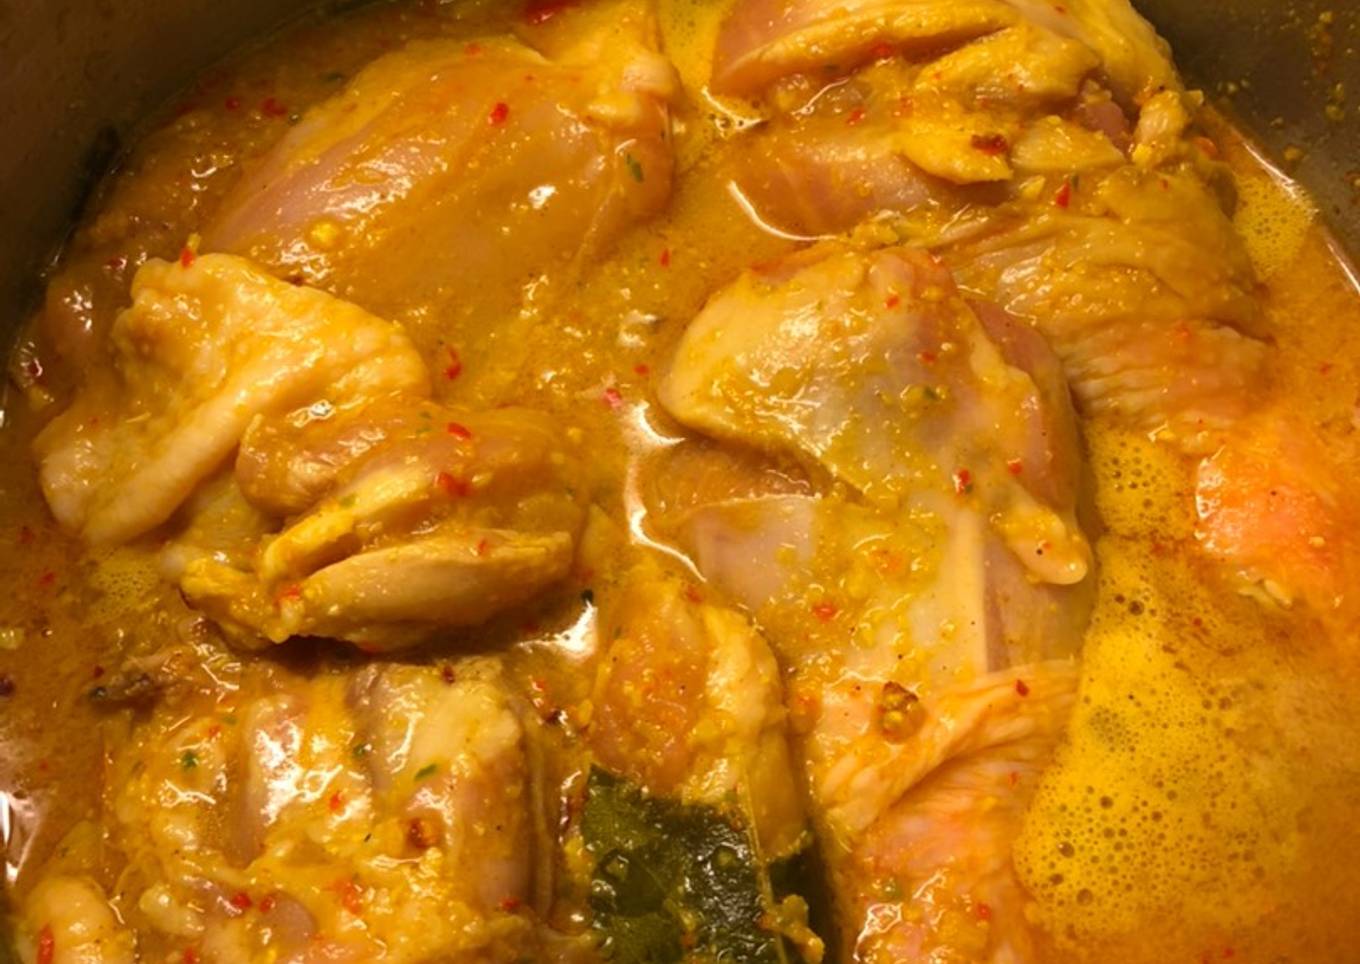 Manado Wuku Chicken (Chef Juna's recipe by William Guzzali on YouTube)